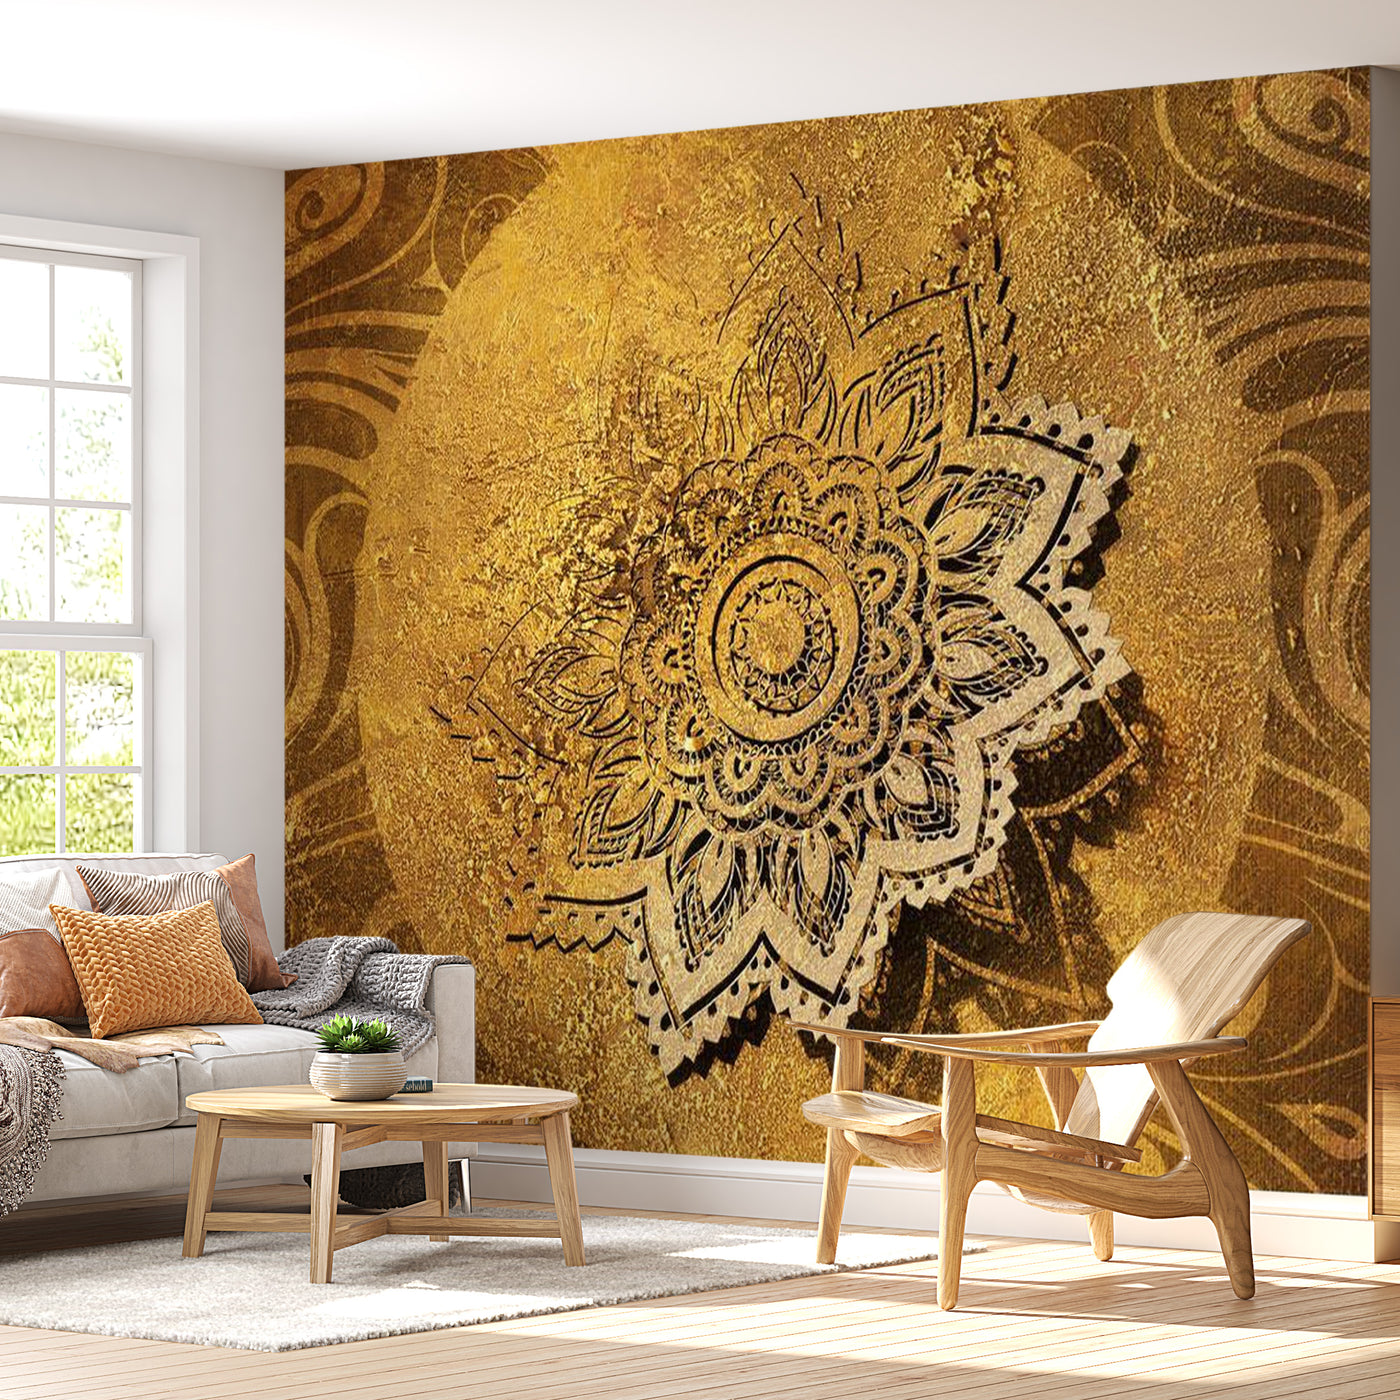 Peel & Stick Mandala Wall Mural - Golden Mandala - Removable Wall Decals